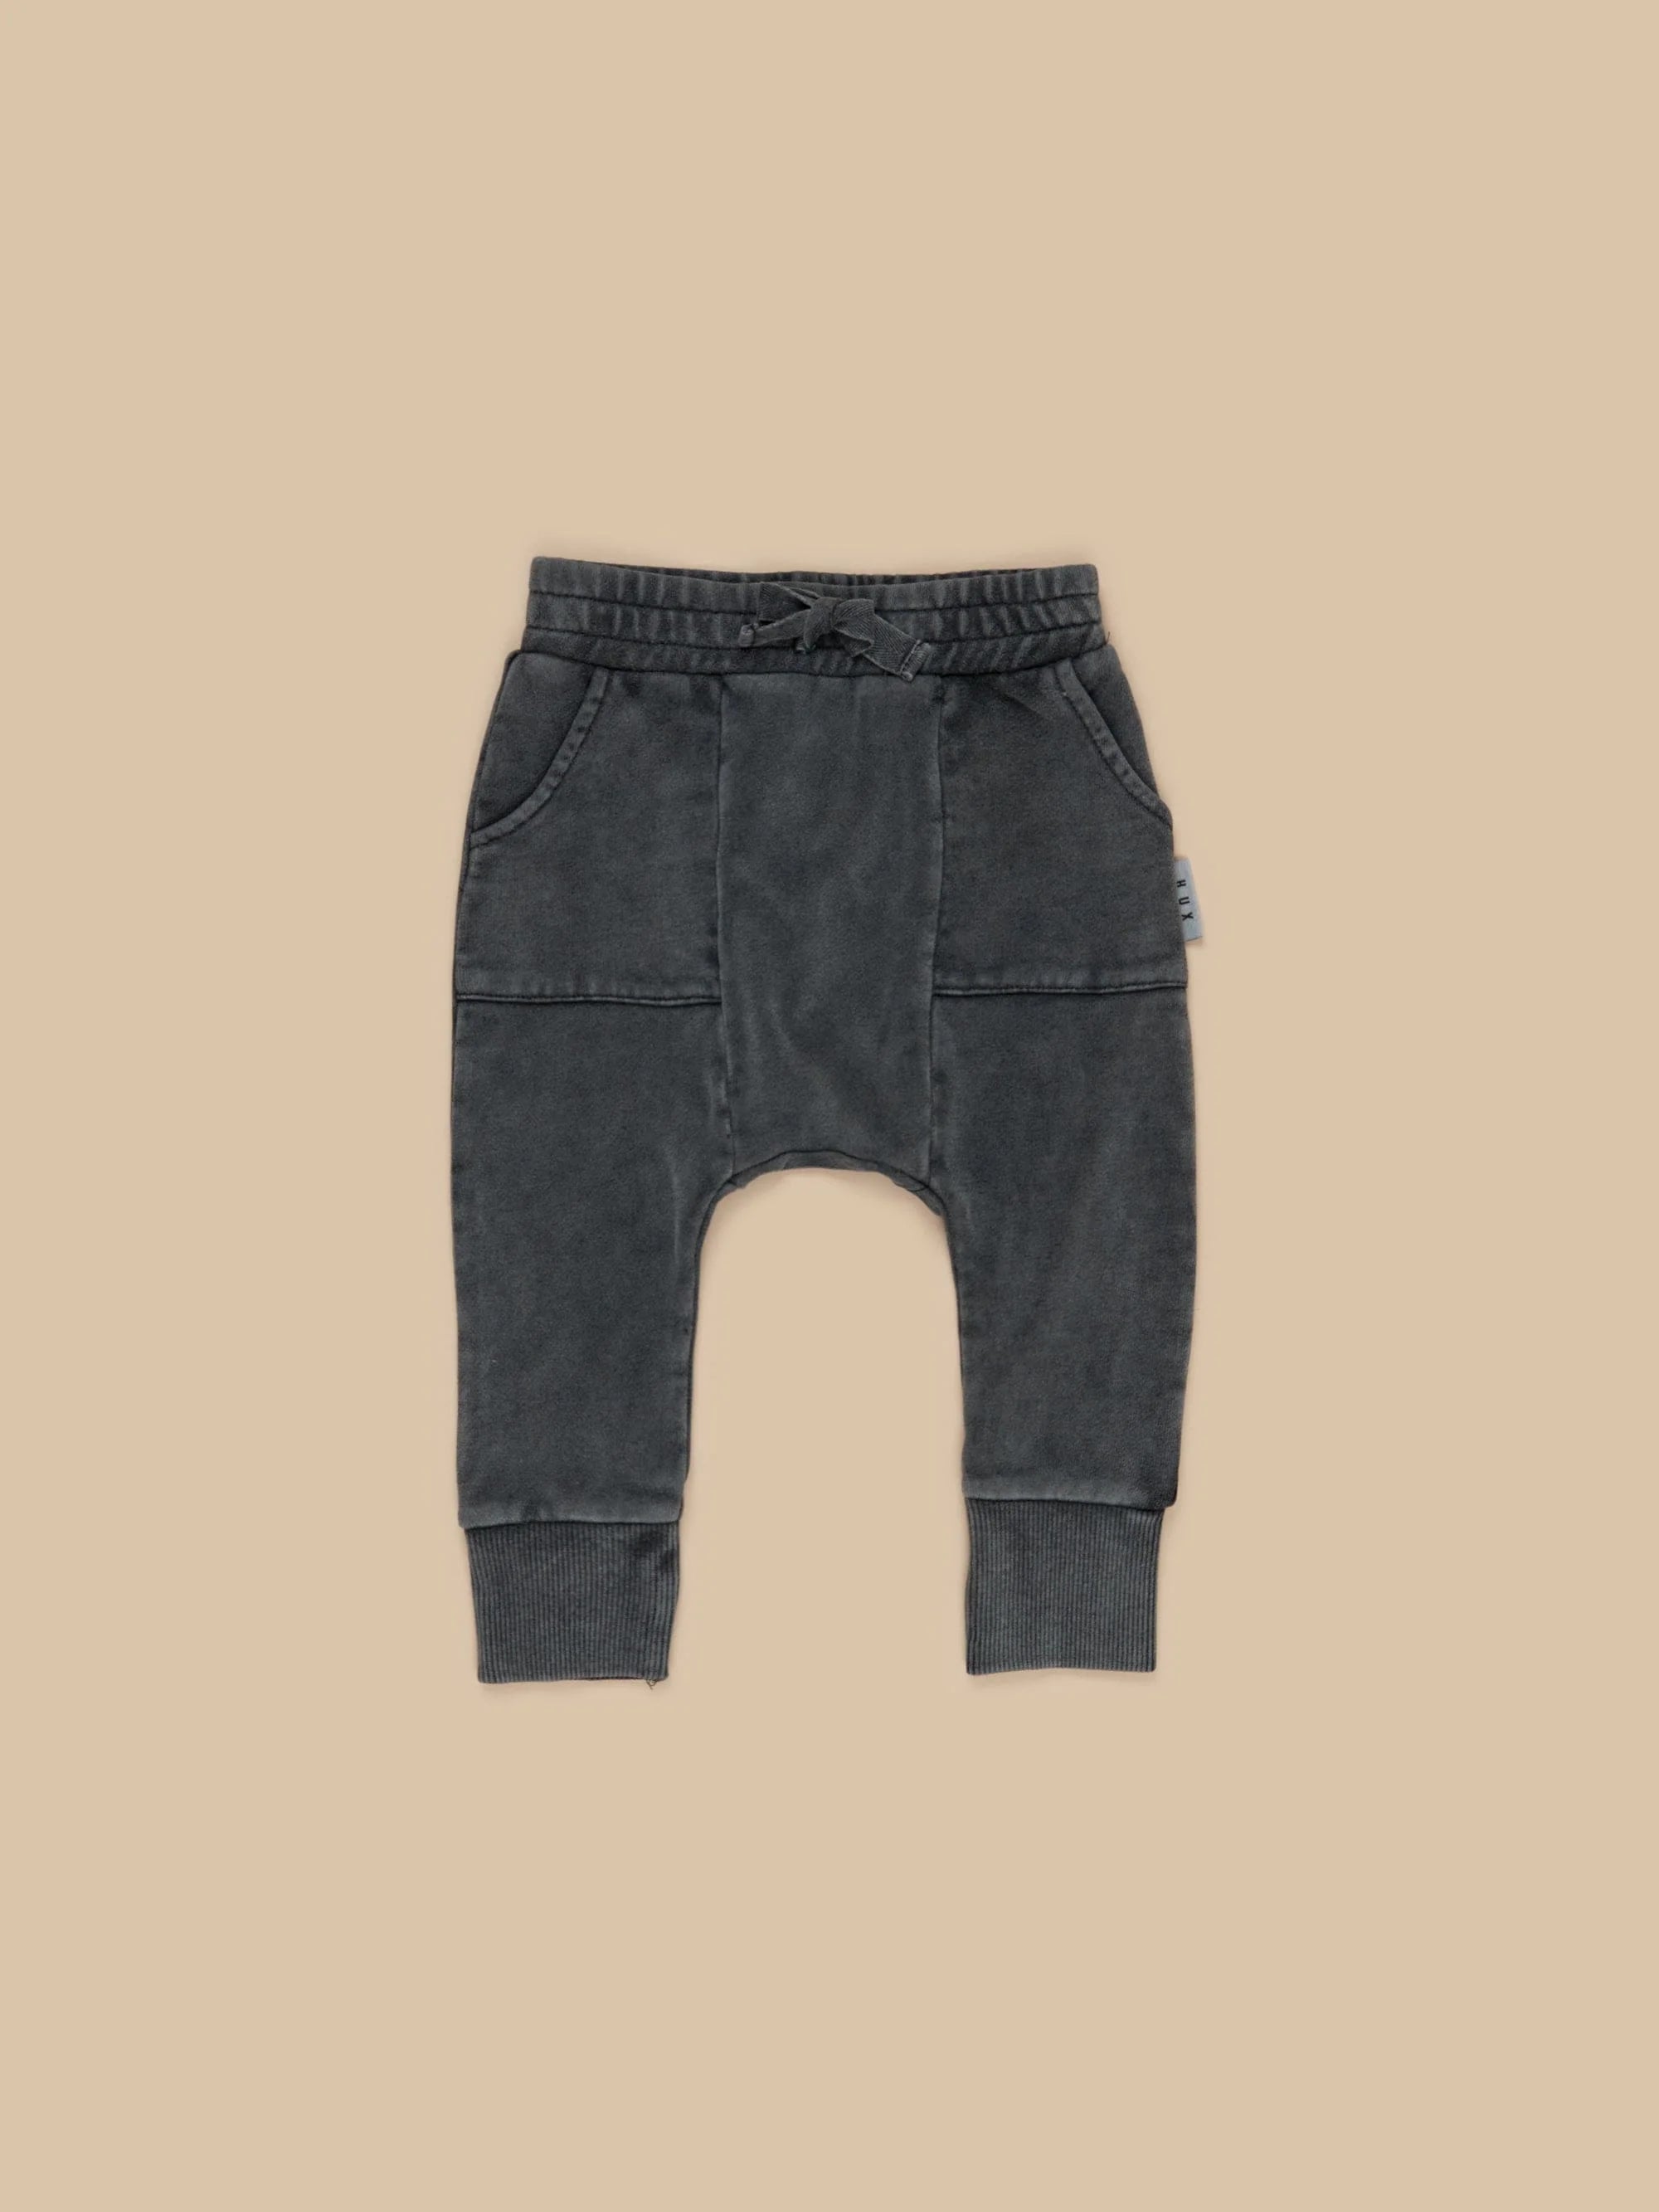 Vintage Black Pocket Drop Crotch Pant - Twinkle Twinkle Little One